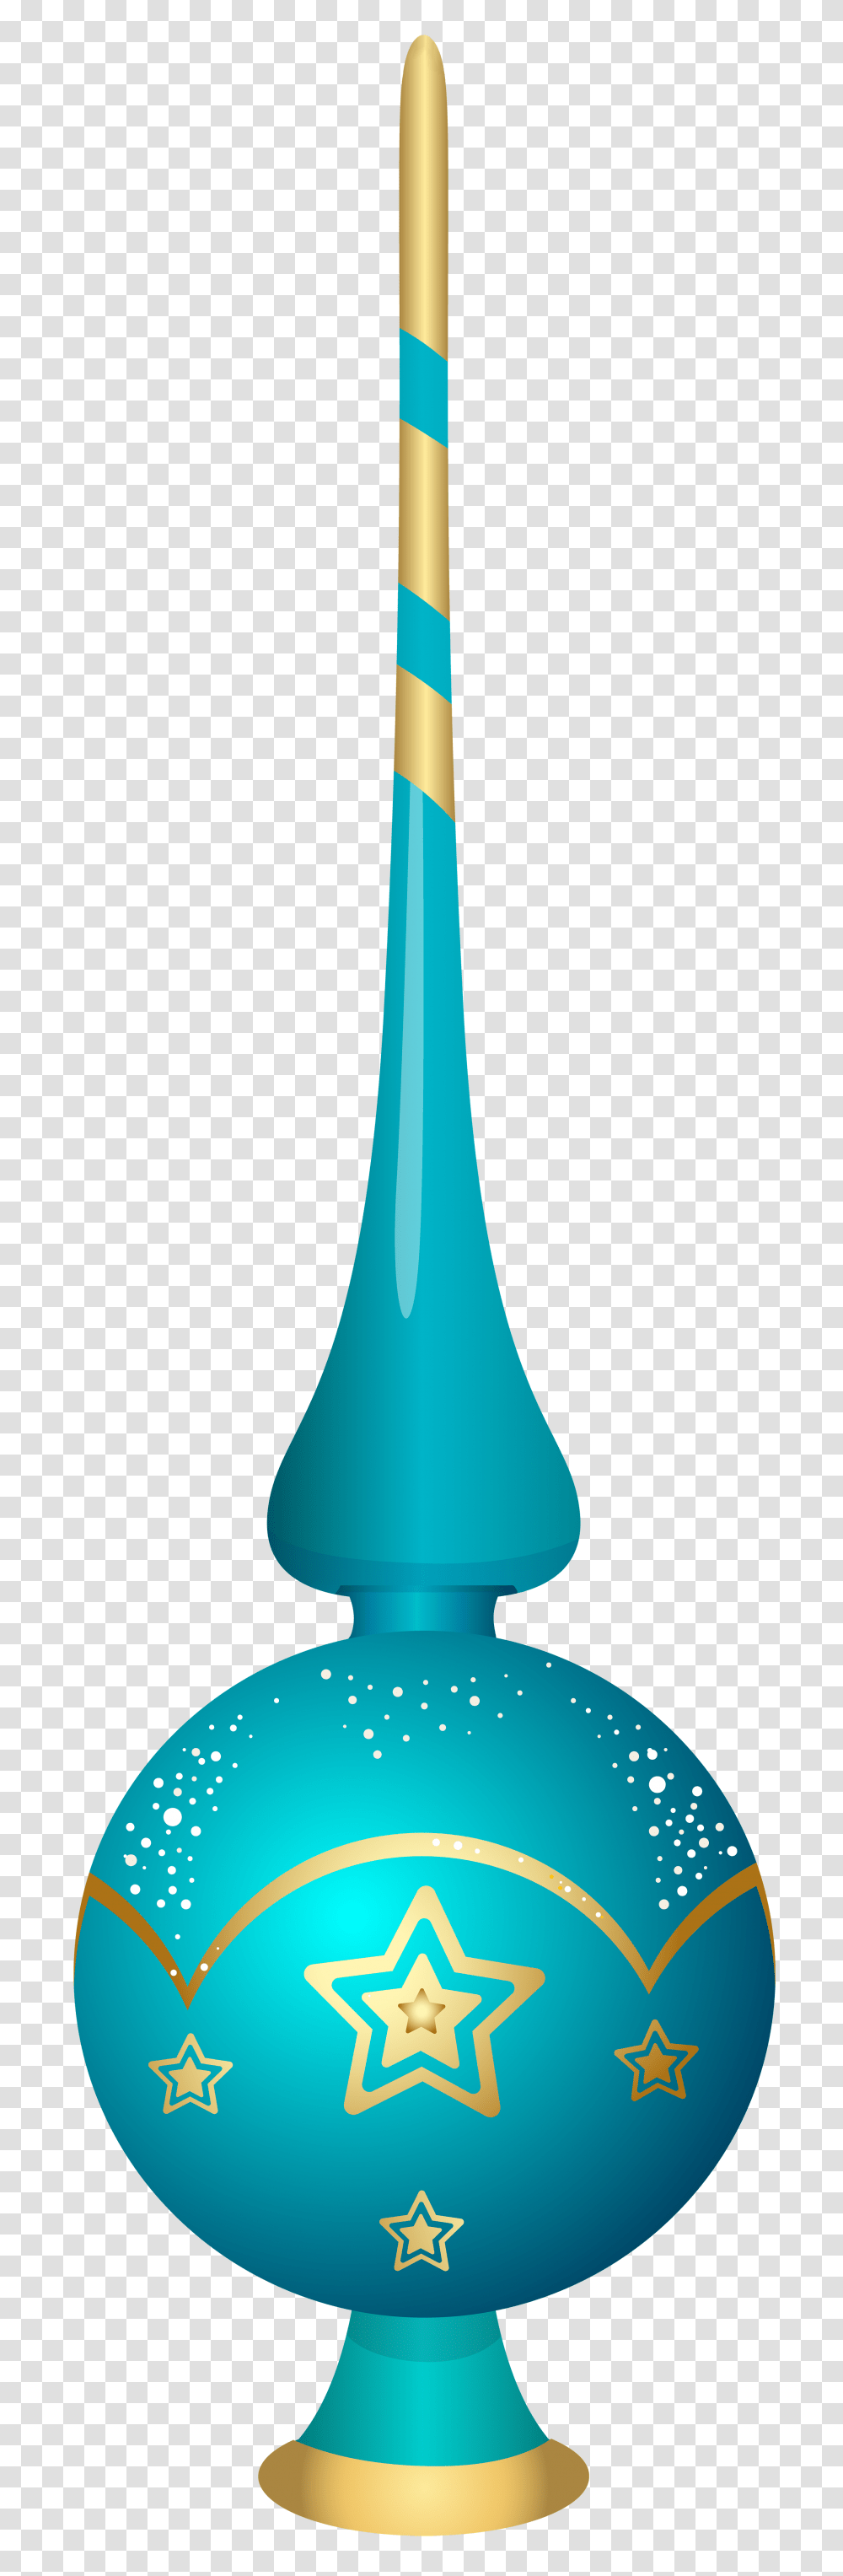 Blue Christmas Tree Top Ornament Clip Art, Bottle, Water Bottle Transparent Png